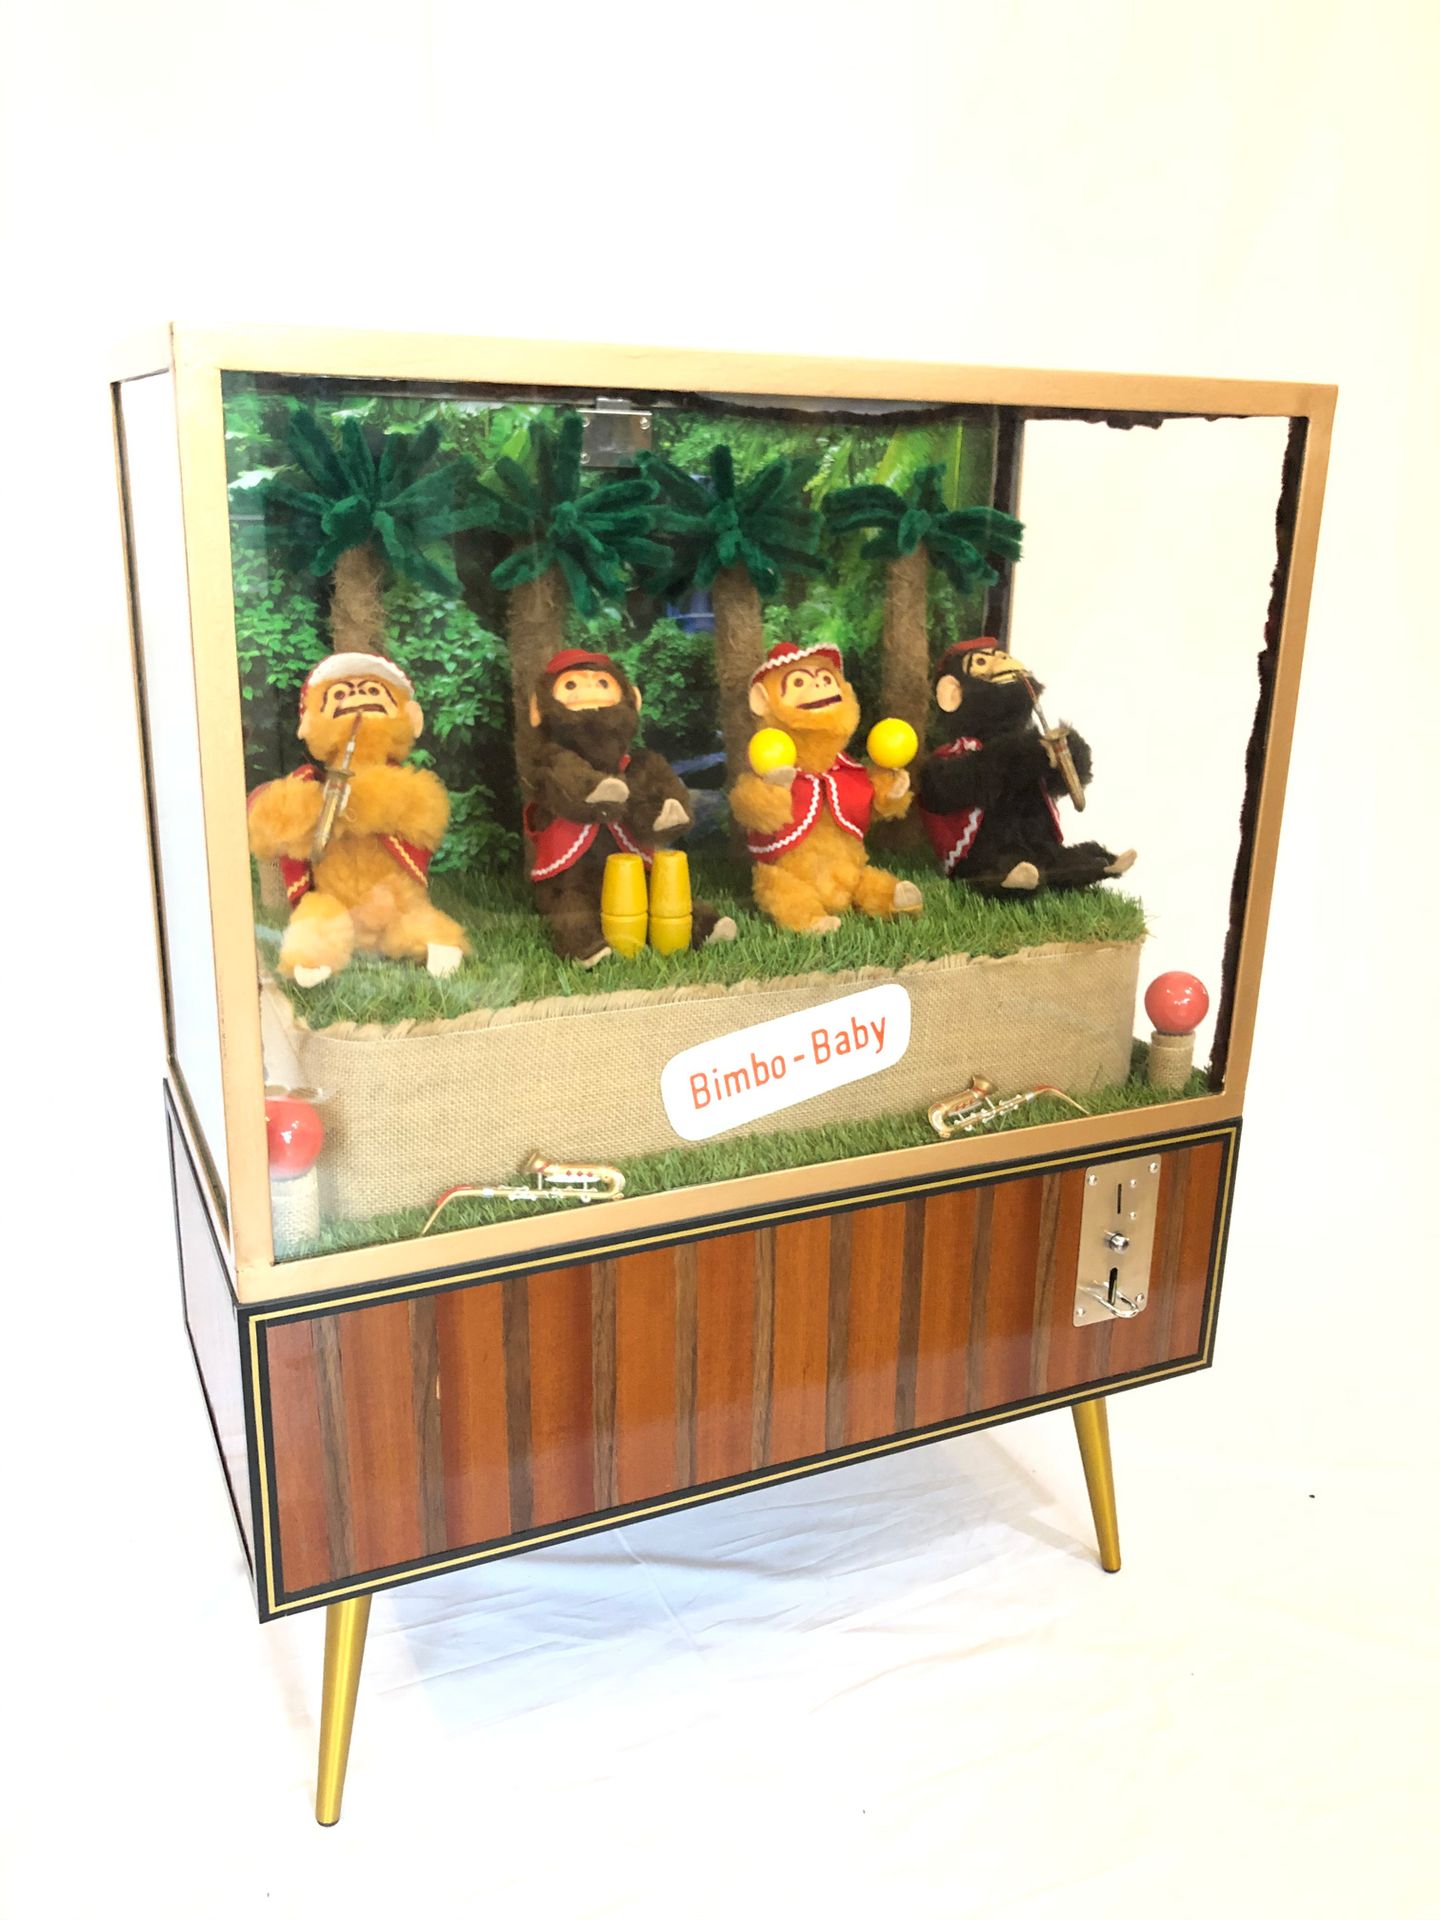 Bimbo-Baby Box with original monkeys from 60's Bimbo Baby Box with original monk&hellip;